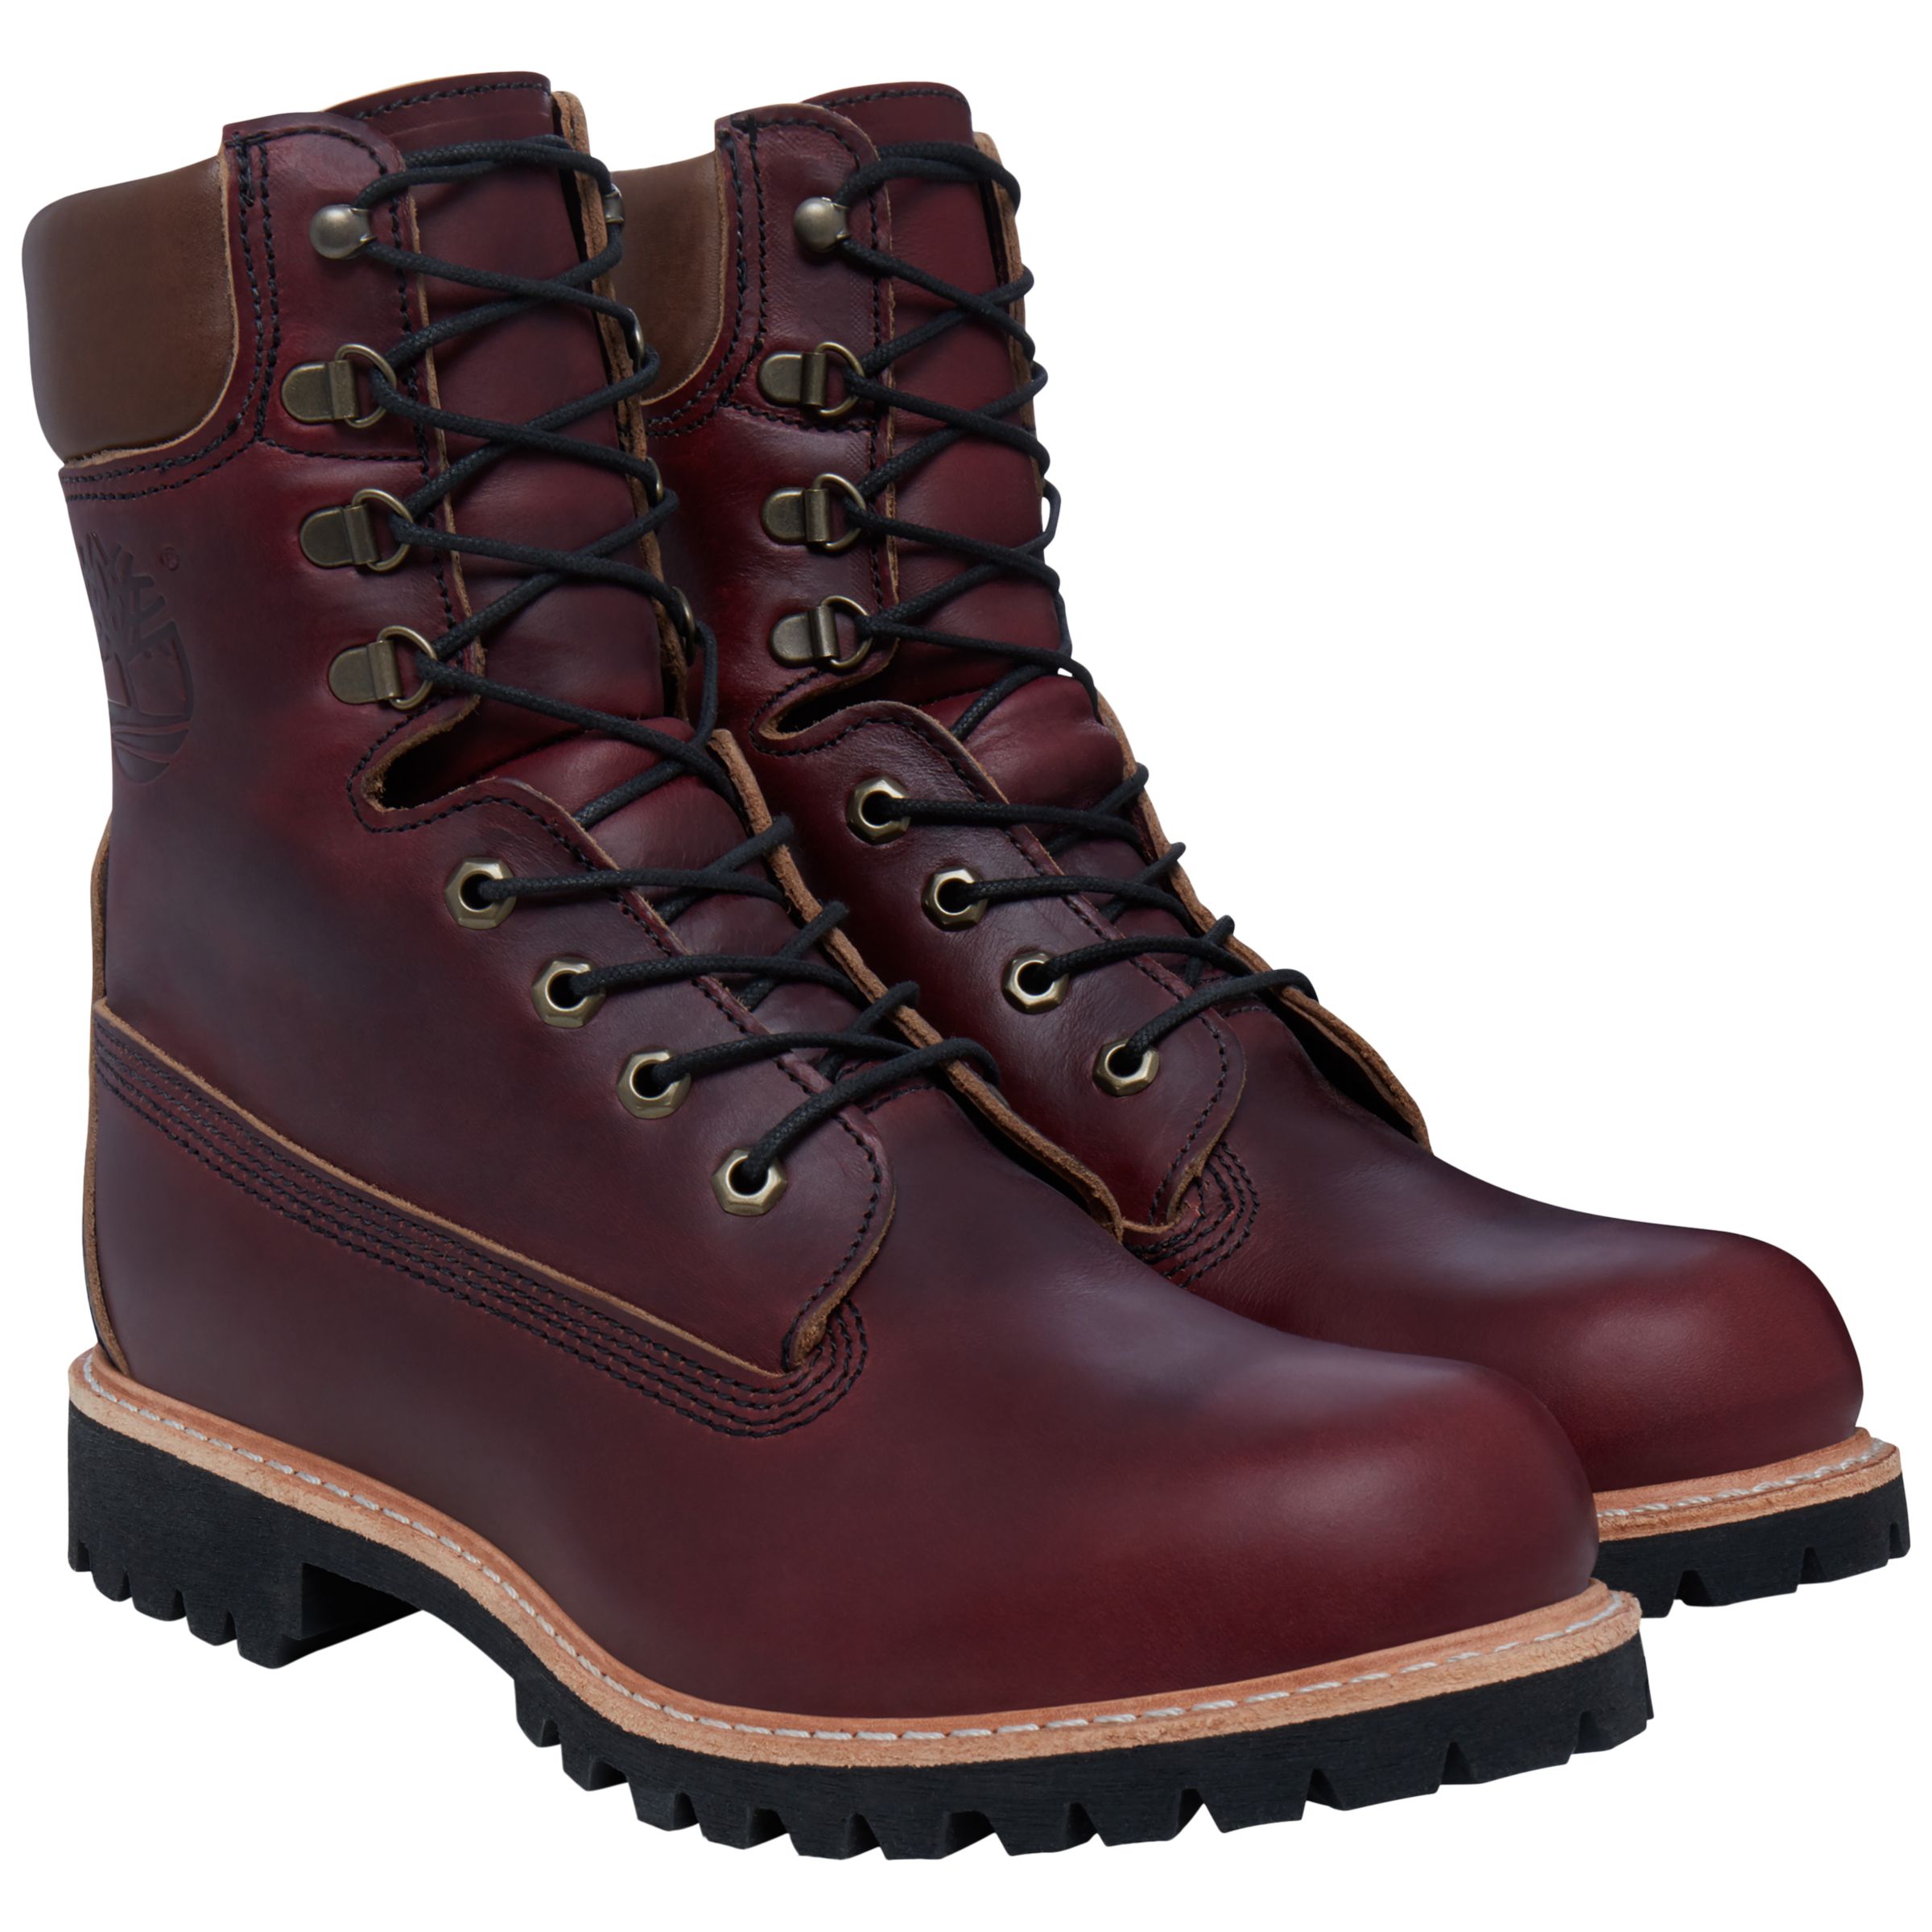 buy timberland boots uk